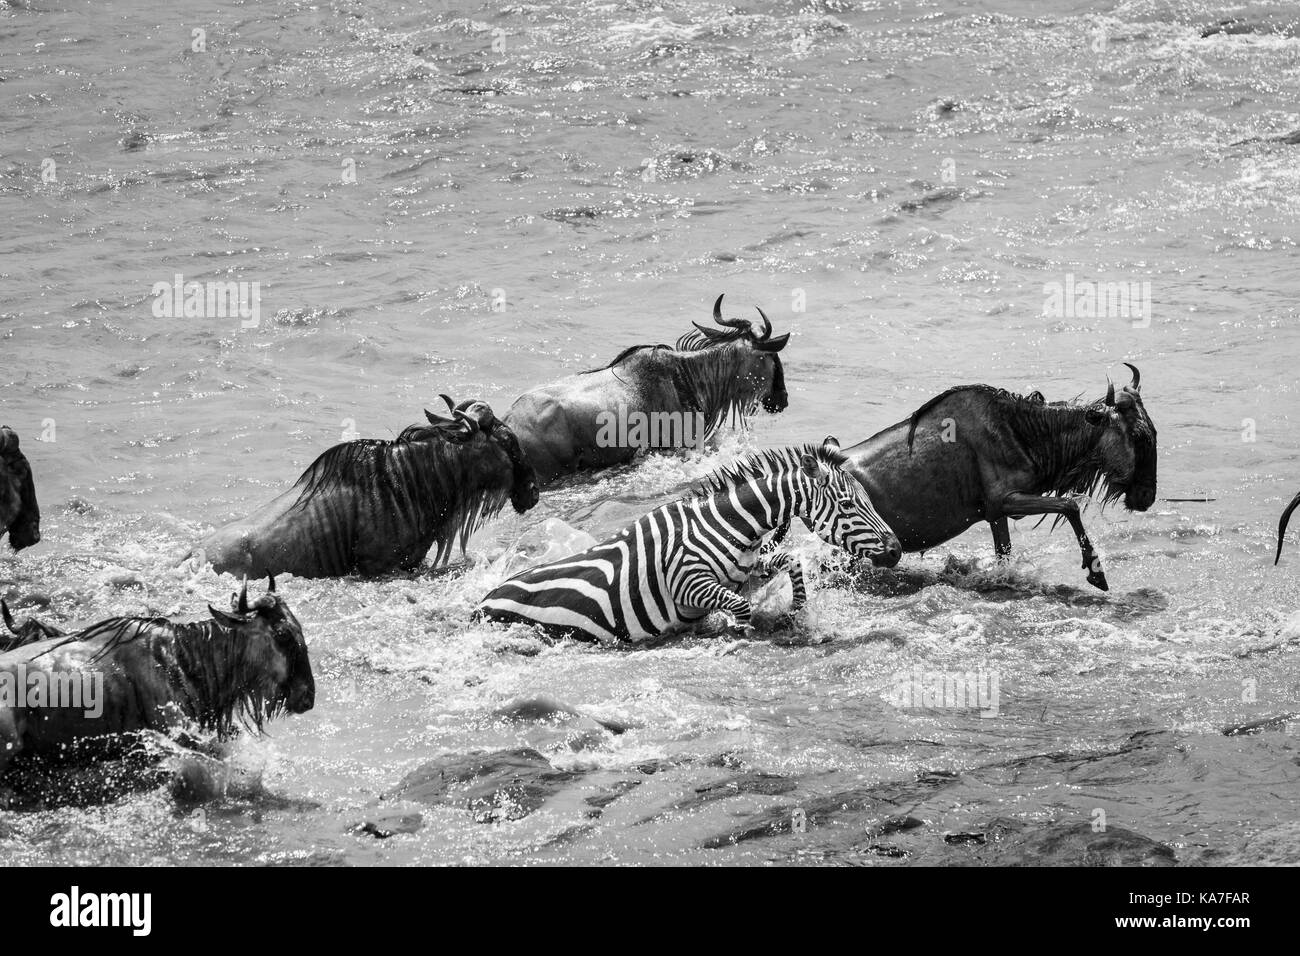 Blue wildebeest (Connochaetes taurinus) and plains zebra (Equus burchellii) struggle across fast flowing River Mara crossing point, Masai Mara, Kenya Stock Photo